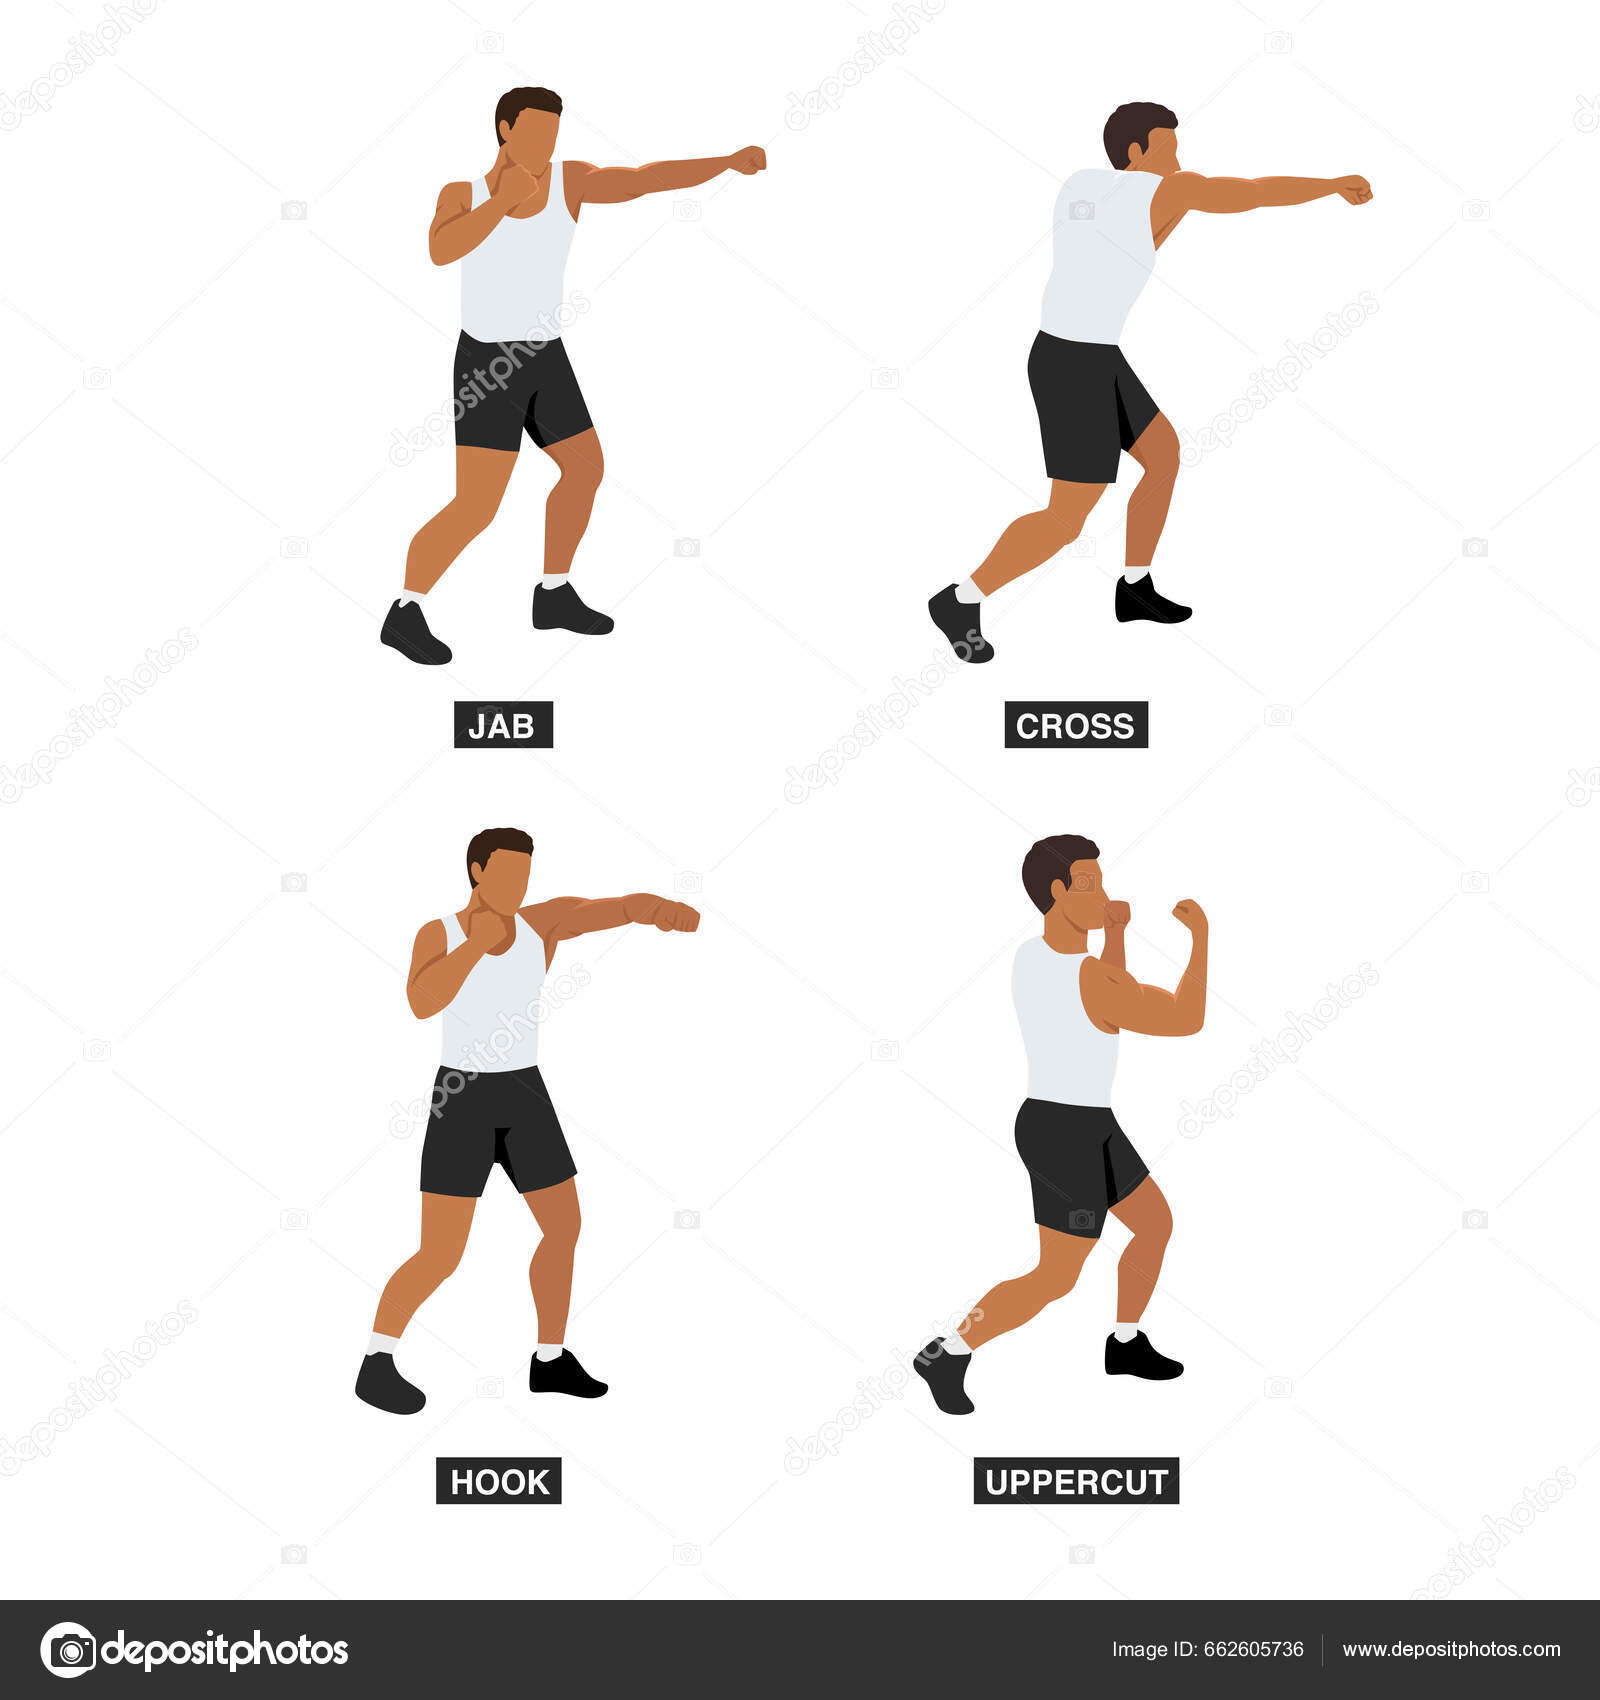 Man Doing Boxing Moves Exercise Jab Cross Hook Uppercut Movement